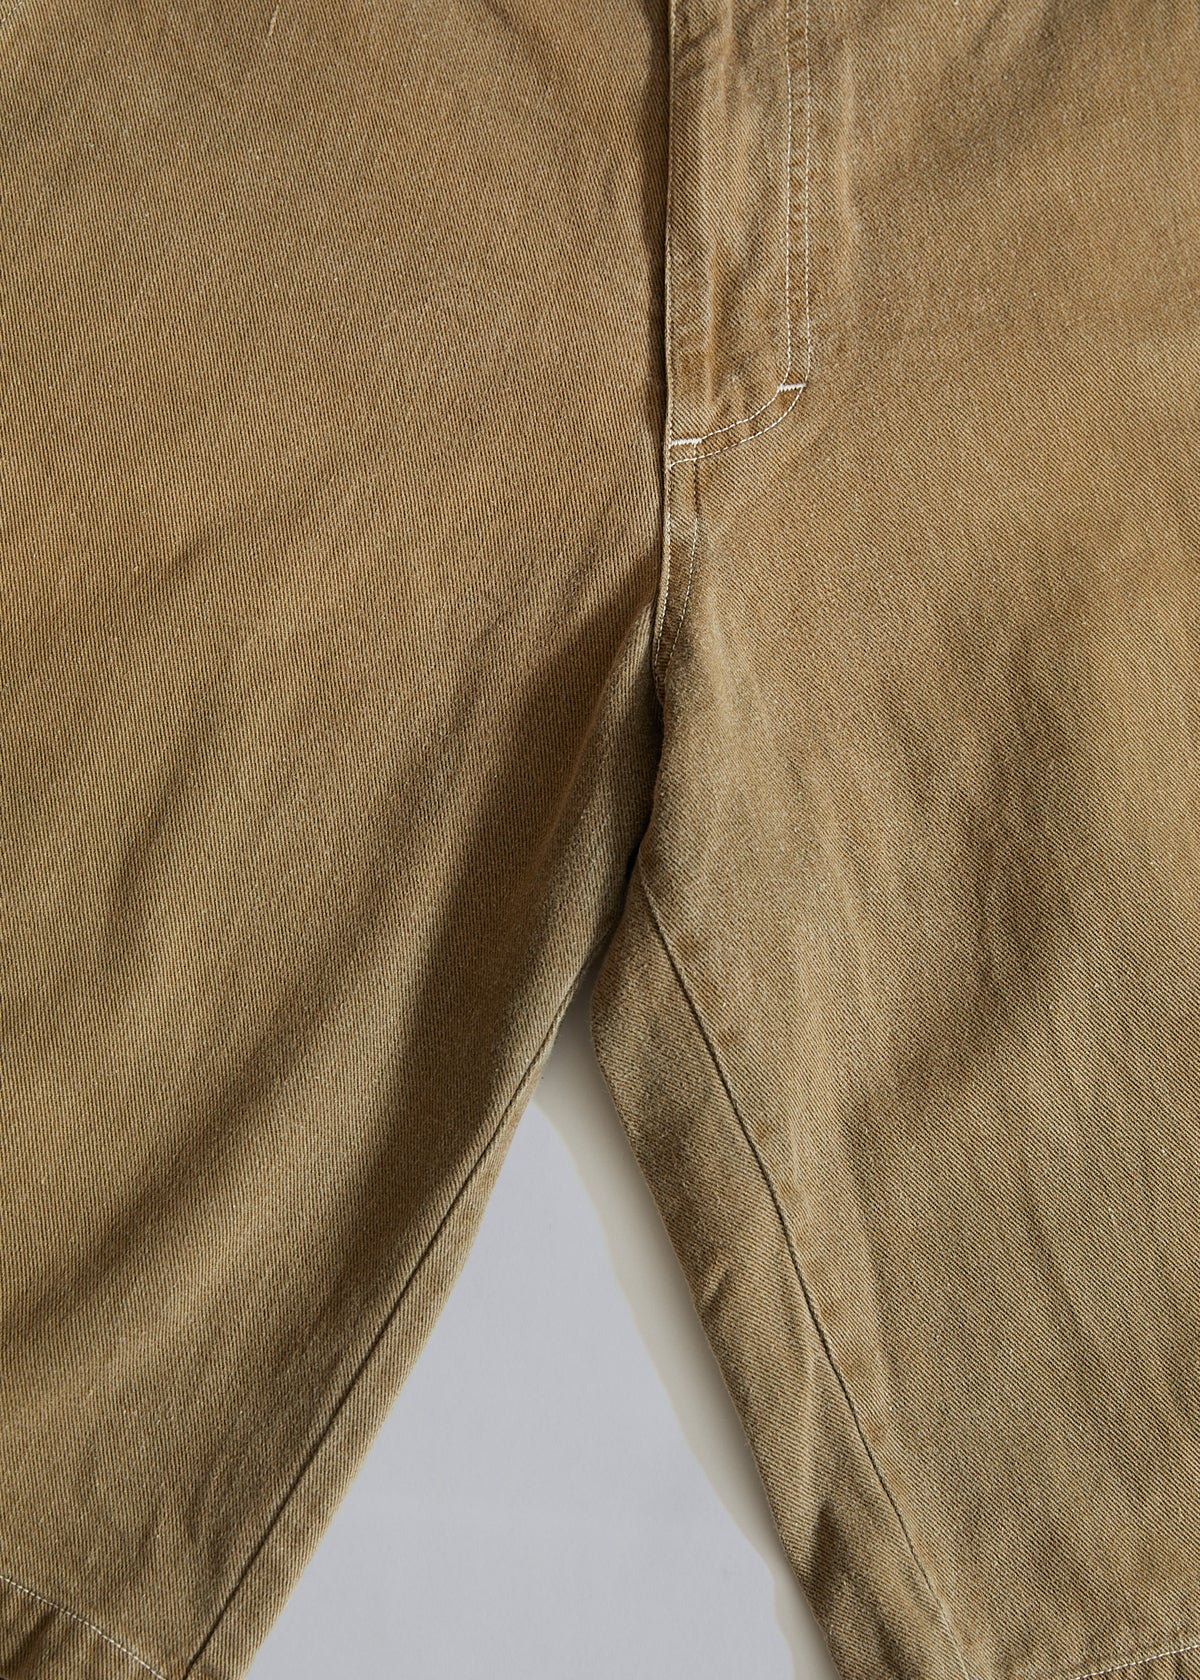 Brown King Size Work Cotton Shorts - 32